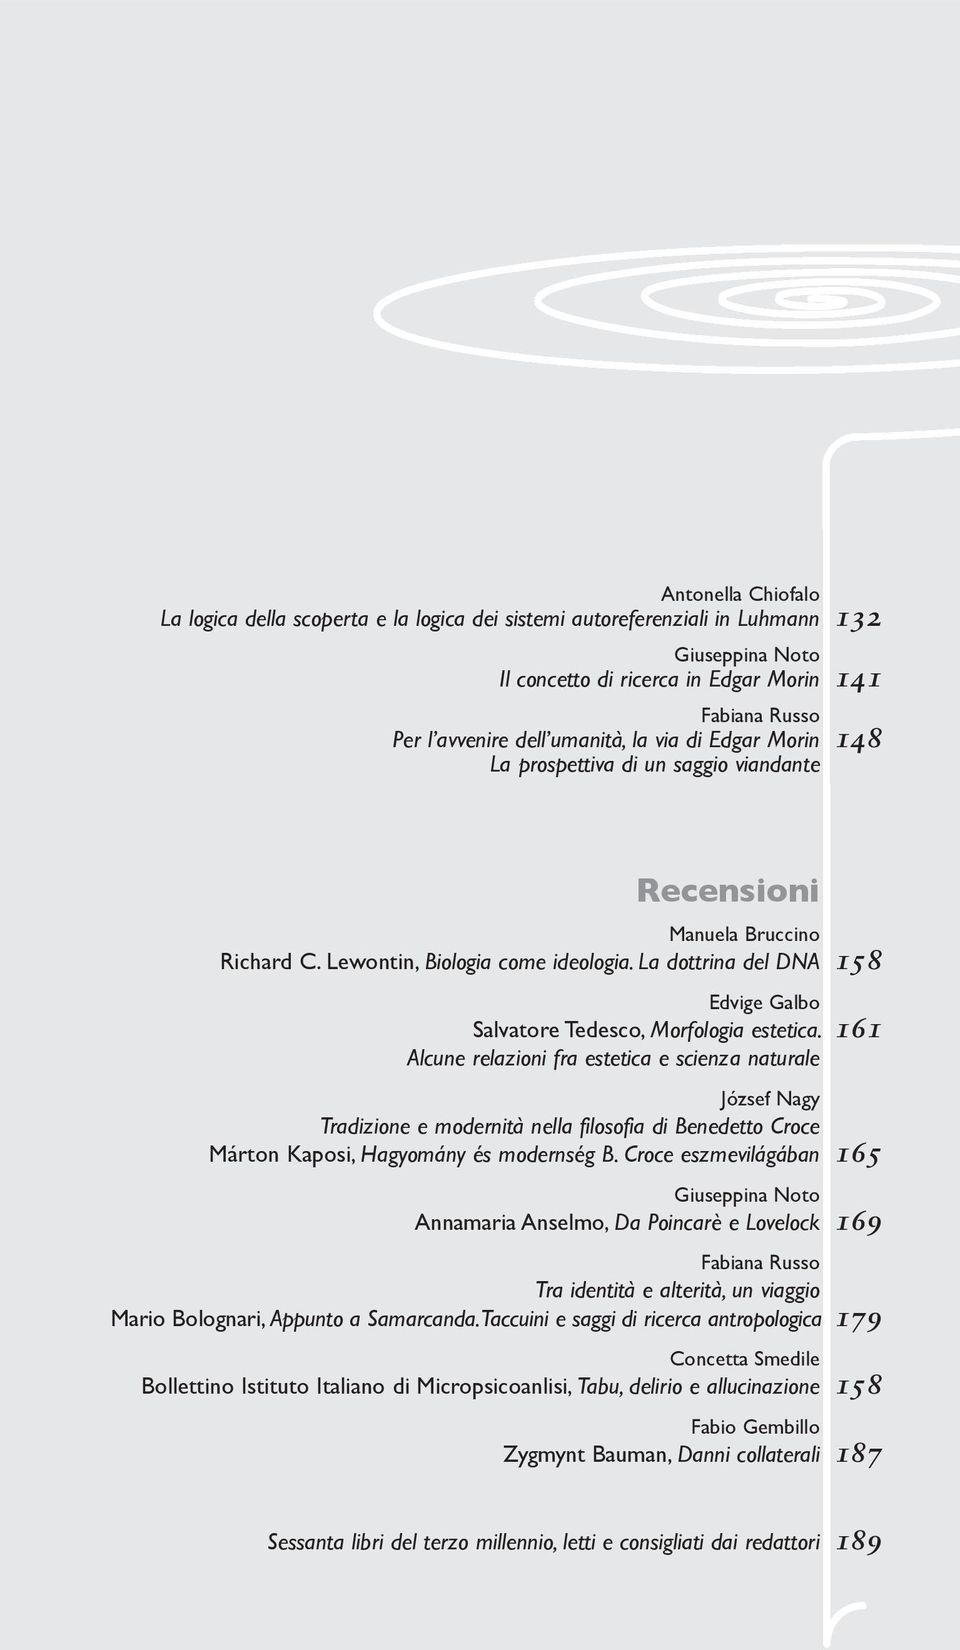 La dottrina del DNA 158 Edvige Galbo Salvatore Tedesco, Morfologia estetica.